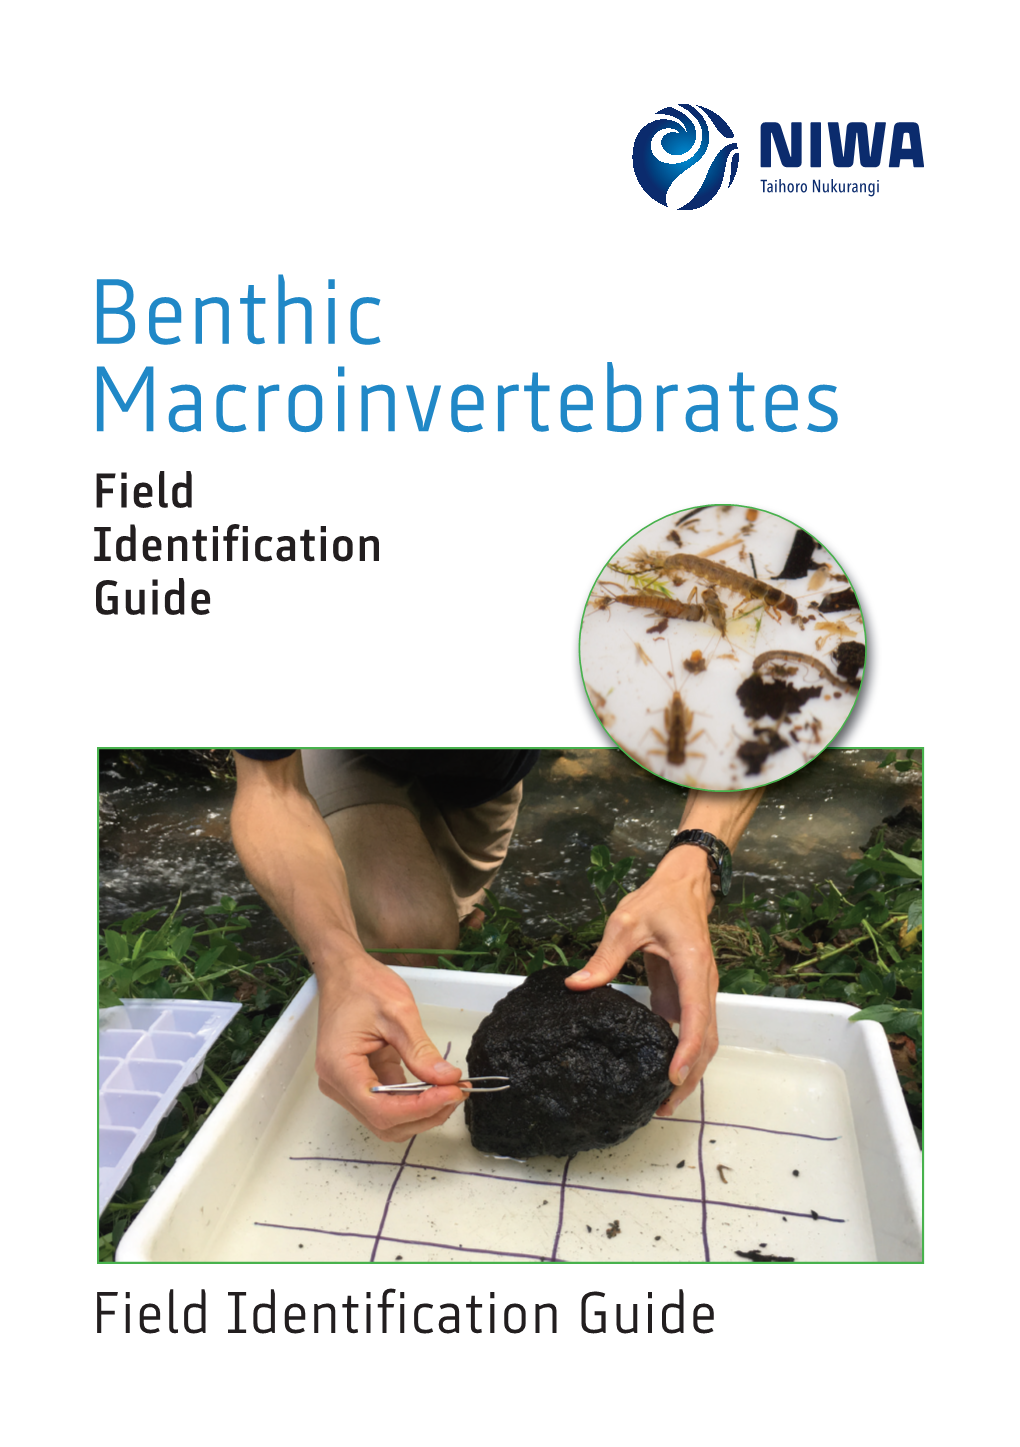 Benthic Macroinvertebrates Field Identification Guide